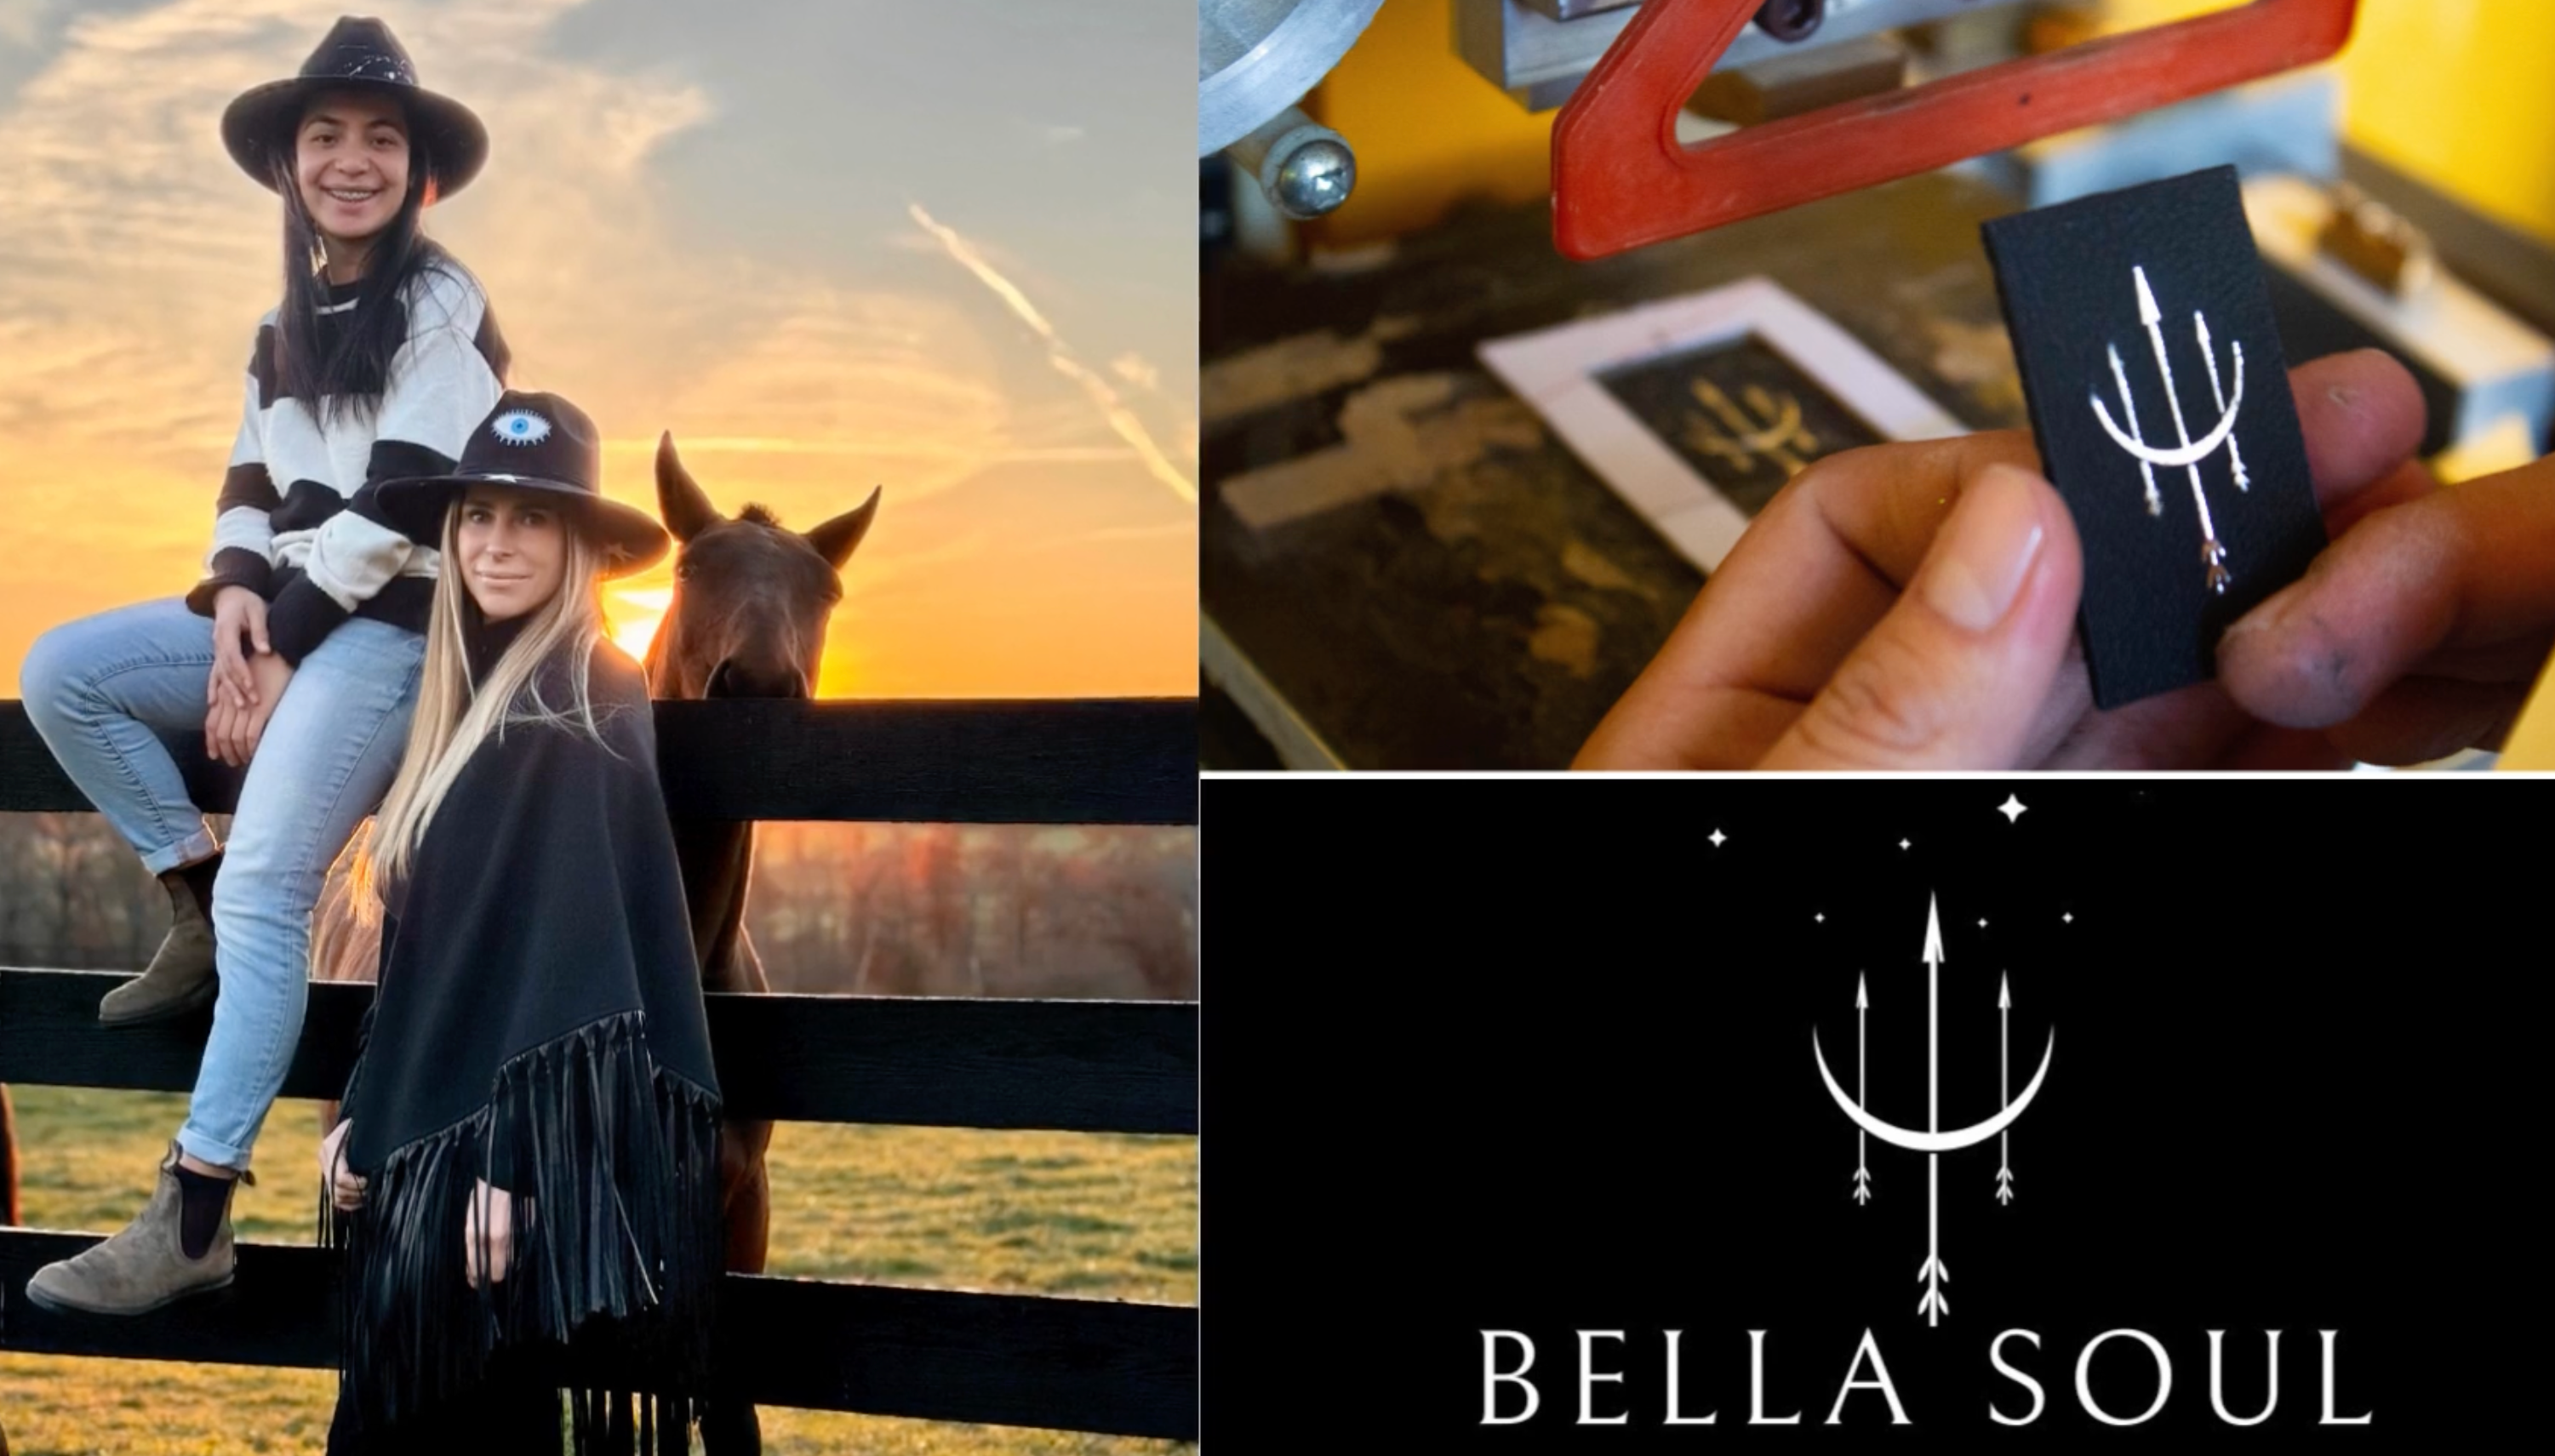 Load video: Inside Bella Soul: Watch Our Story